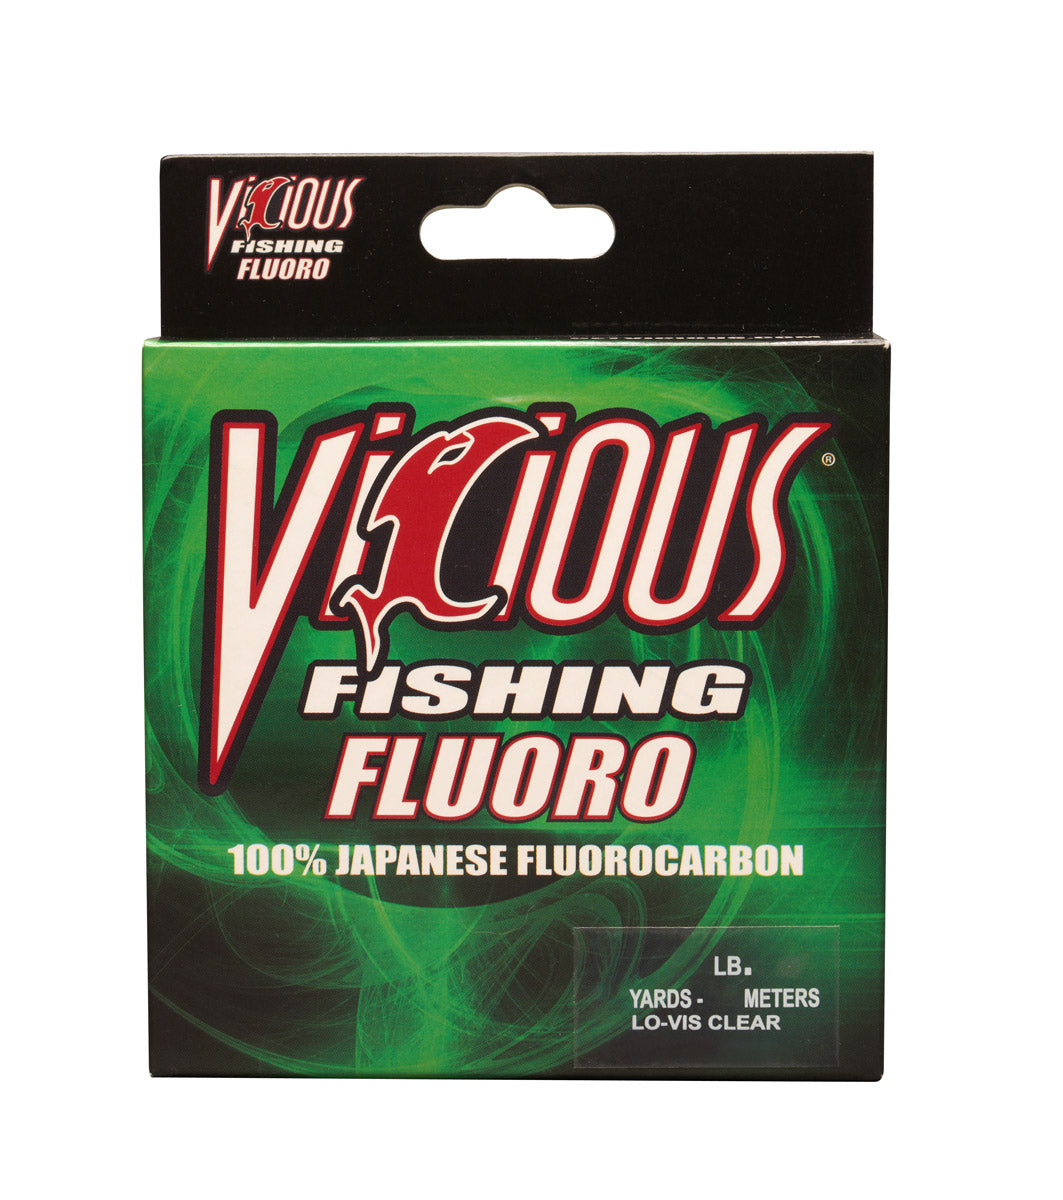 Vicious Pro Elite Fluorocarbon helps Swindle - Bassmaster